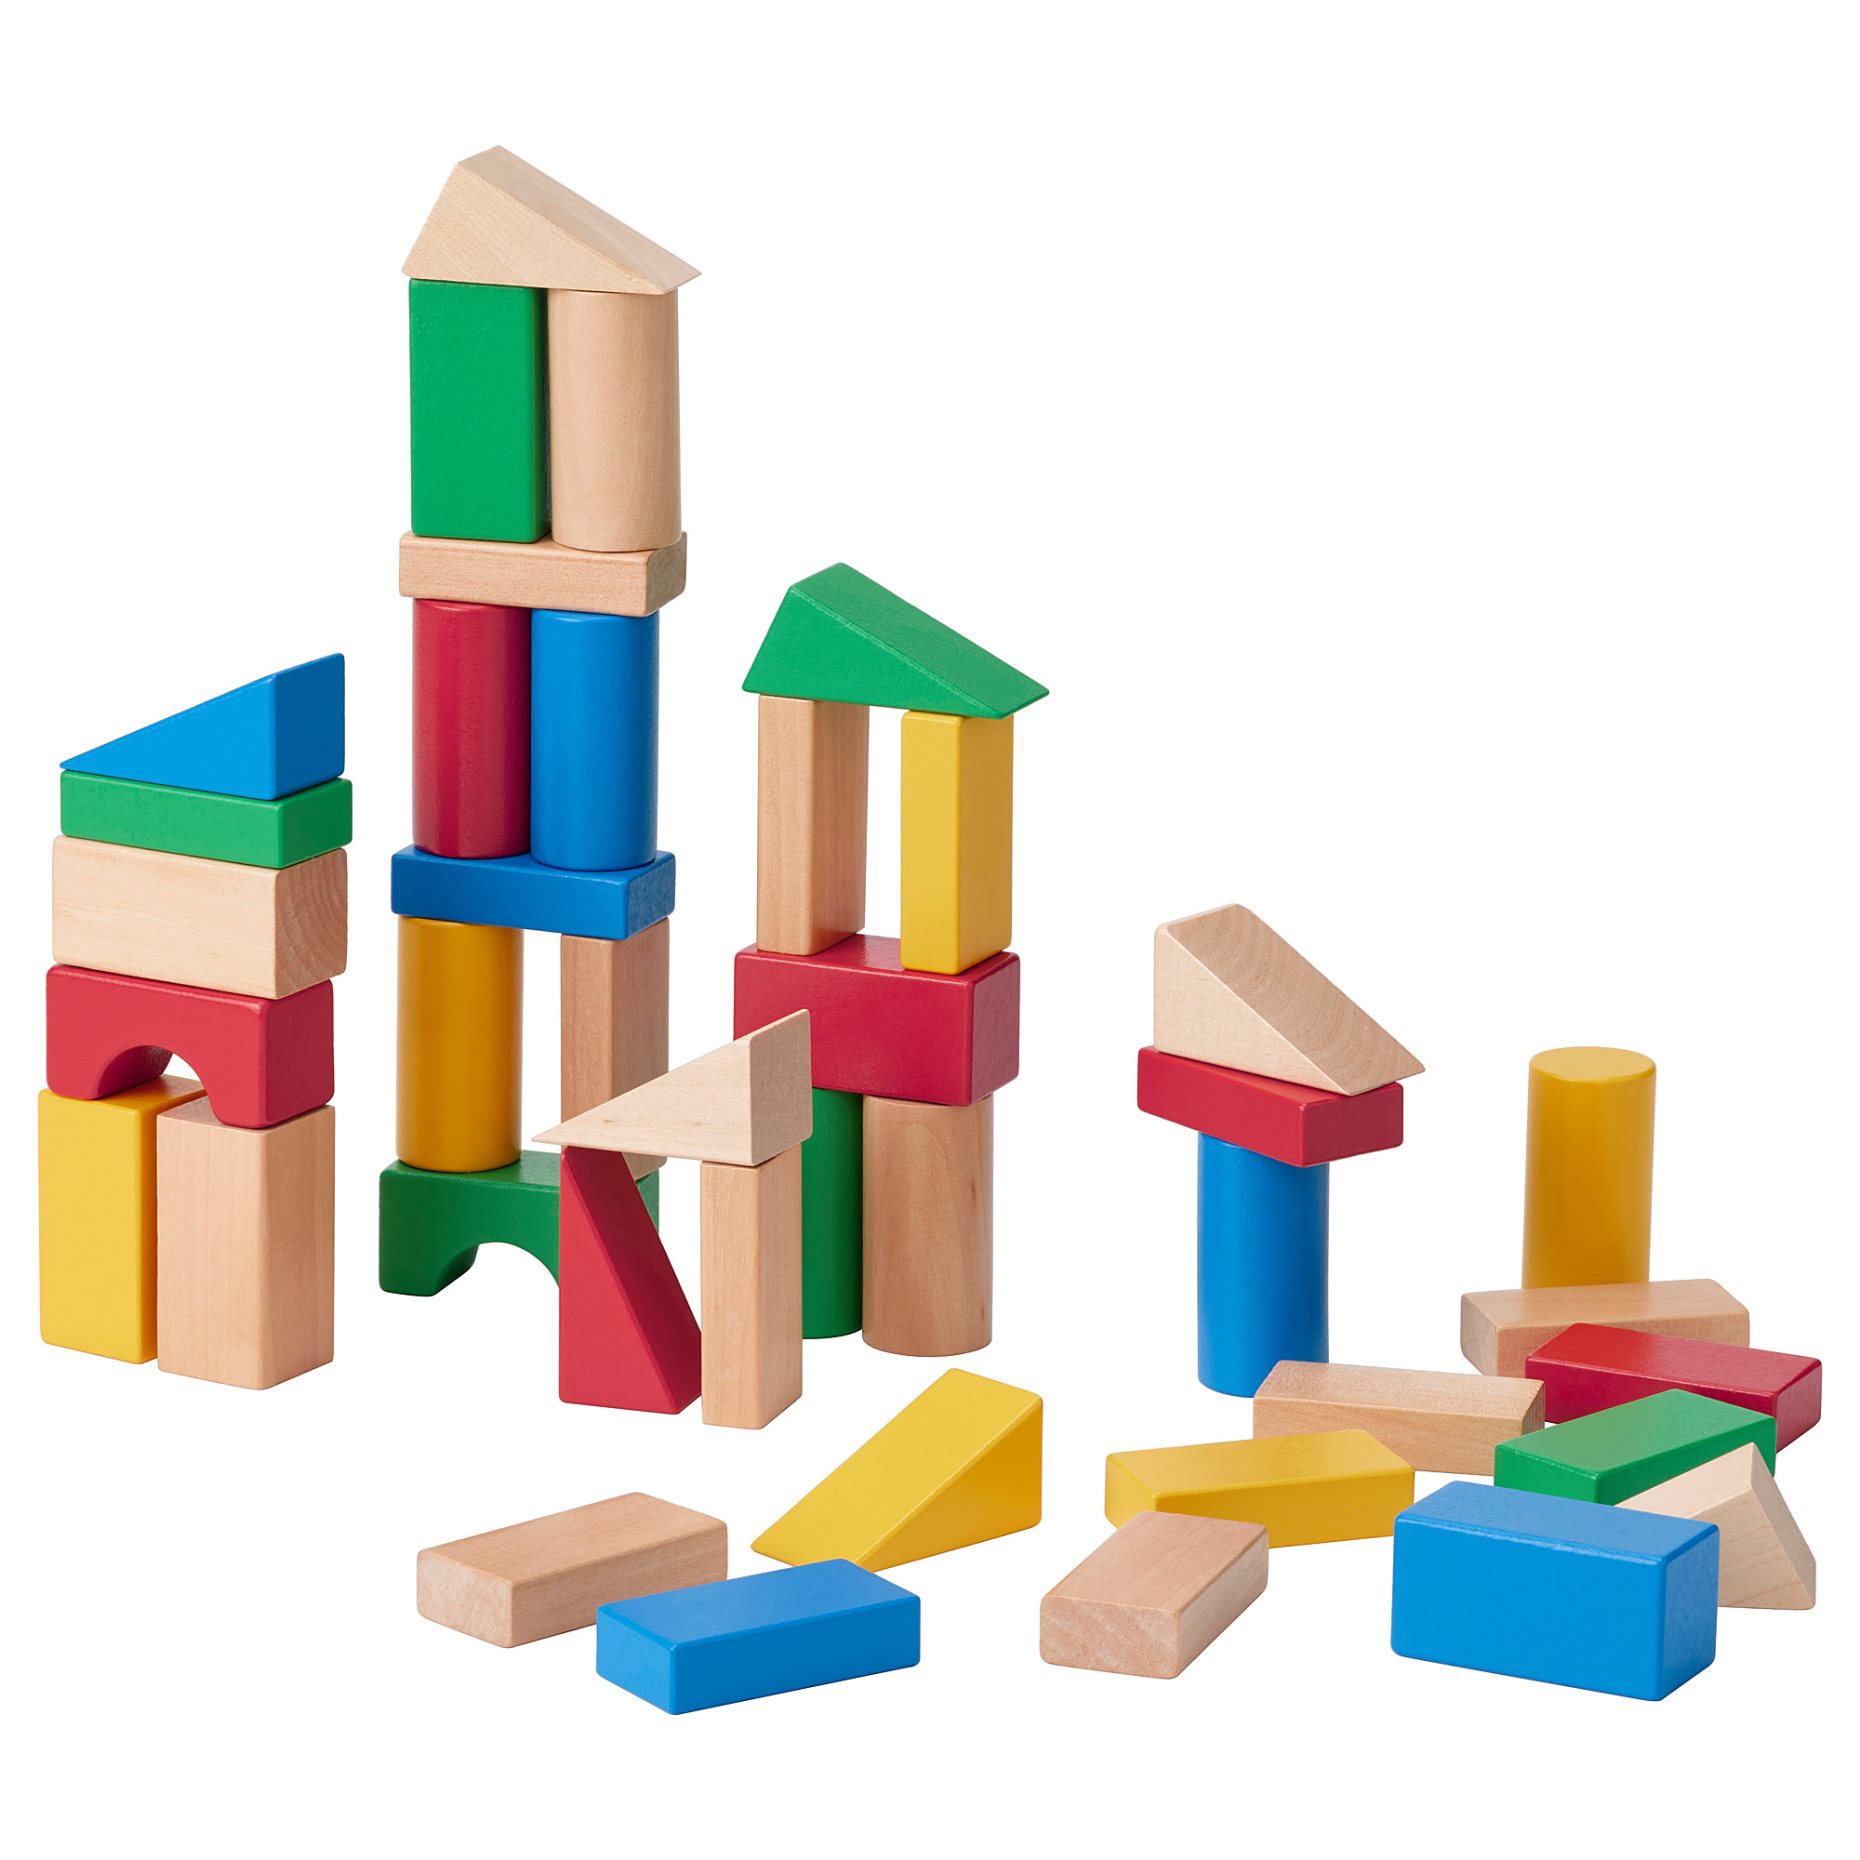 UNDERHÅLLA, 40-piece wooden building block set, 005.066.84